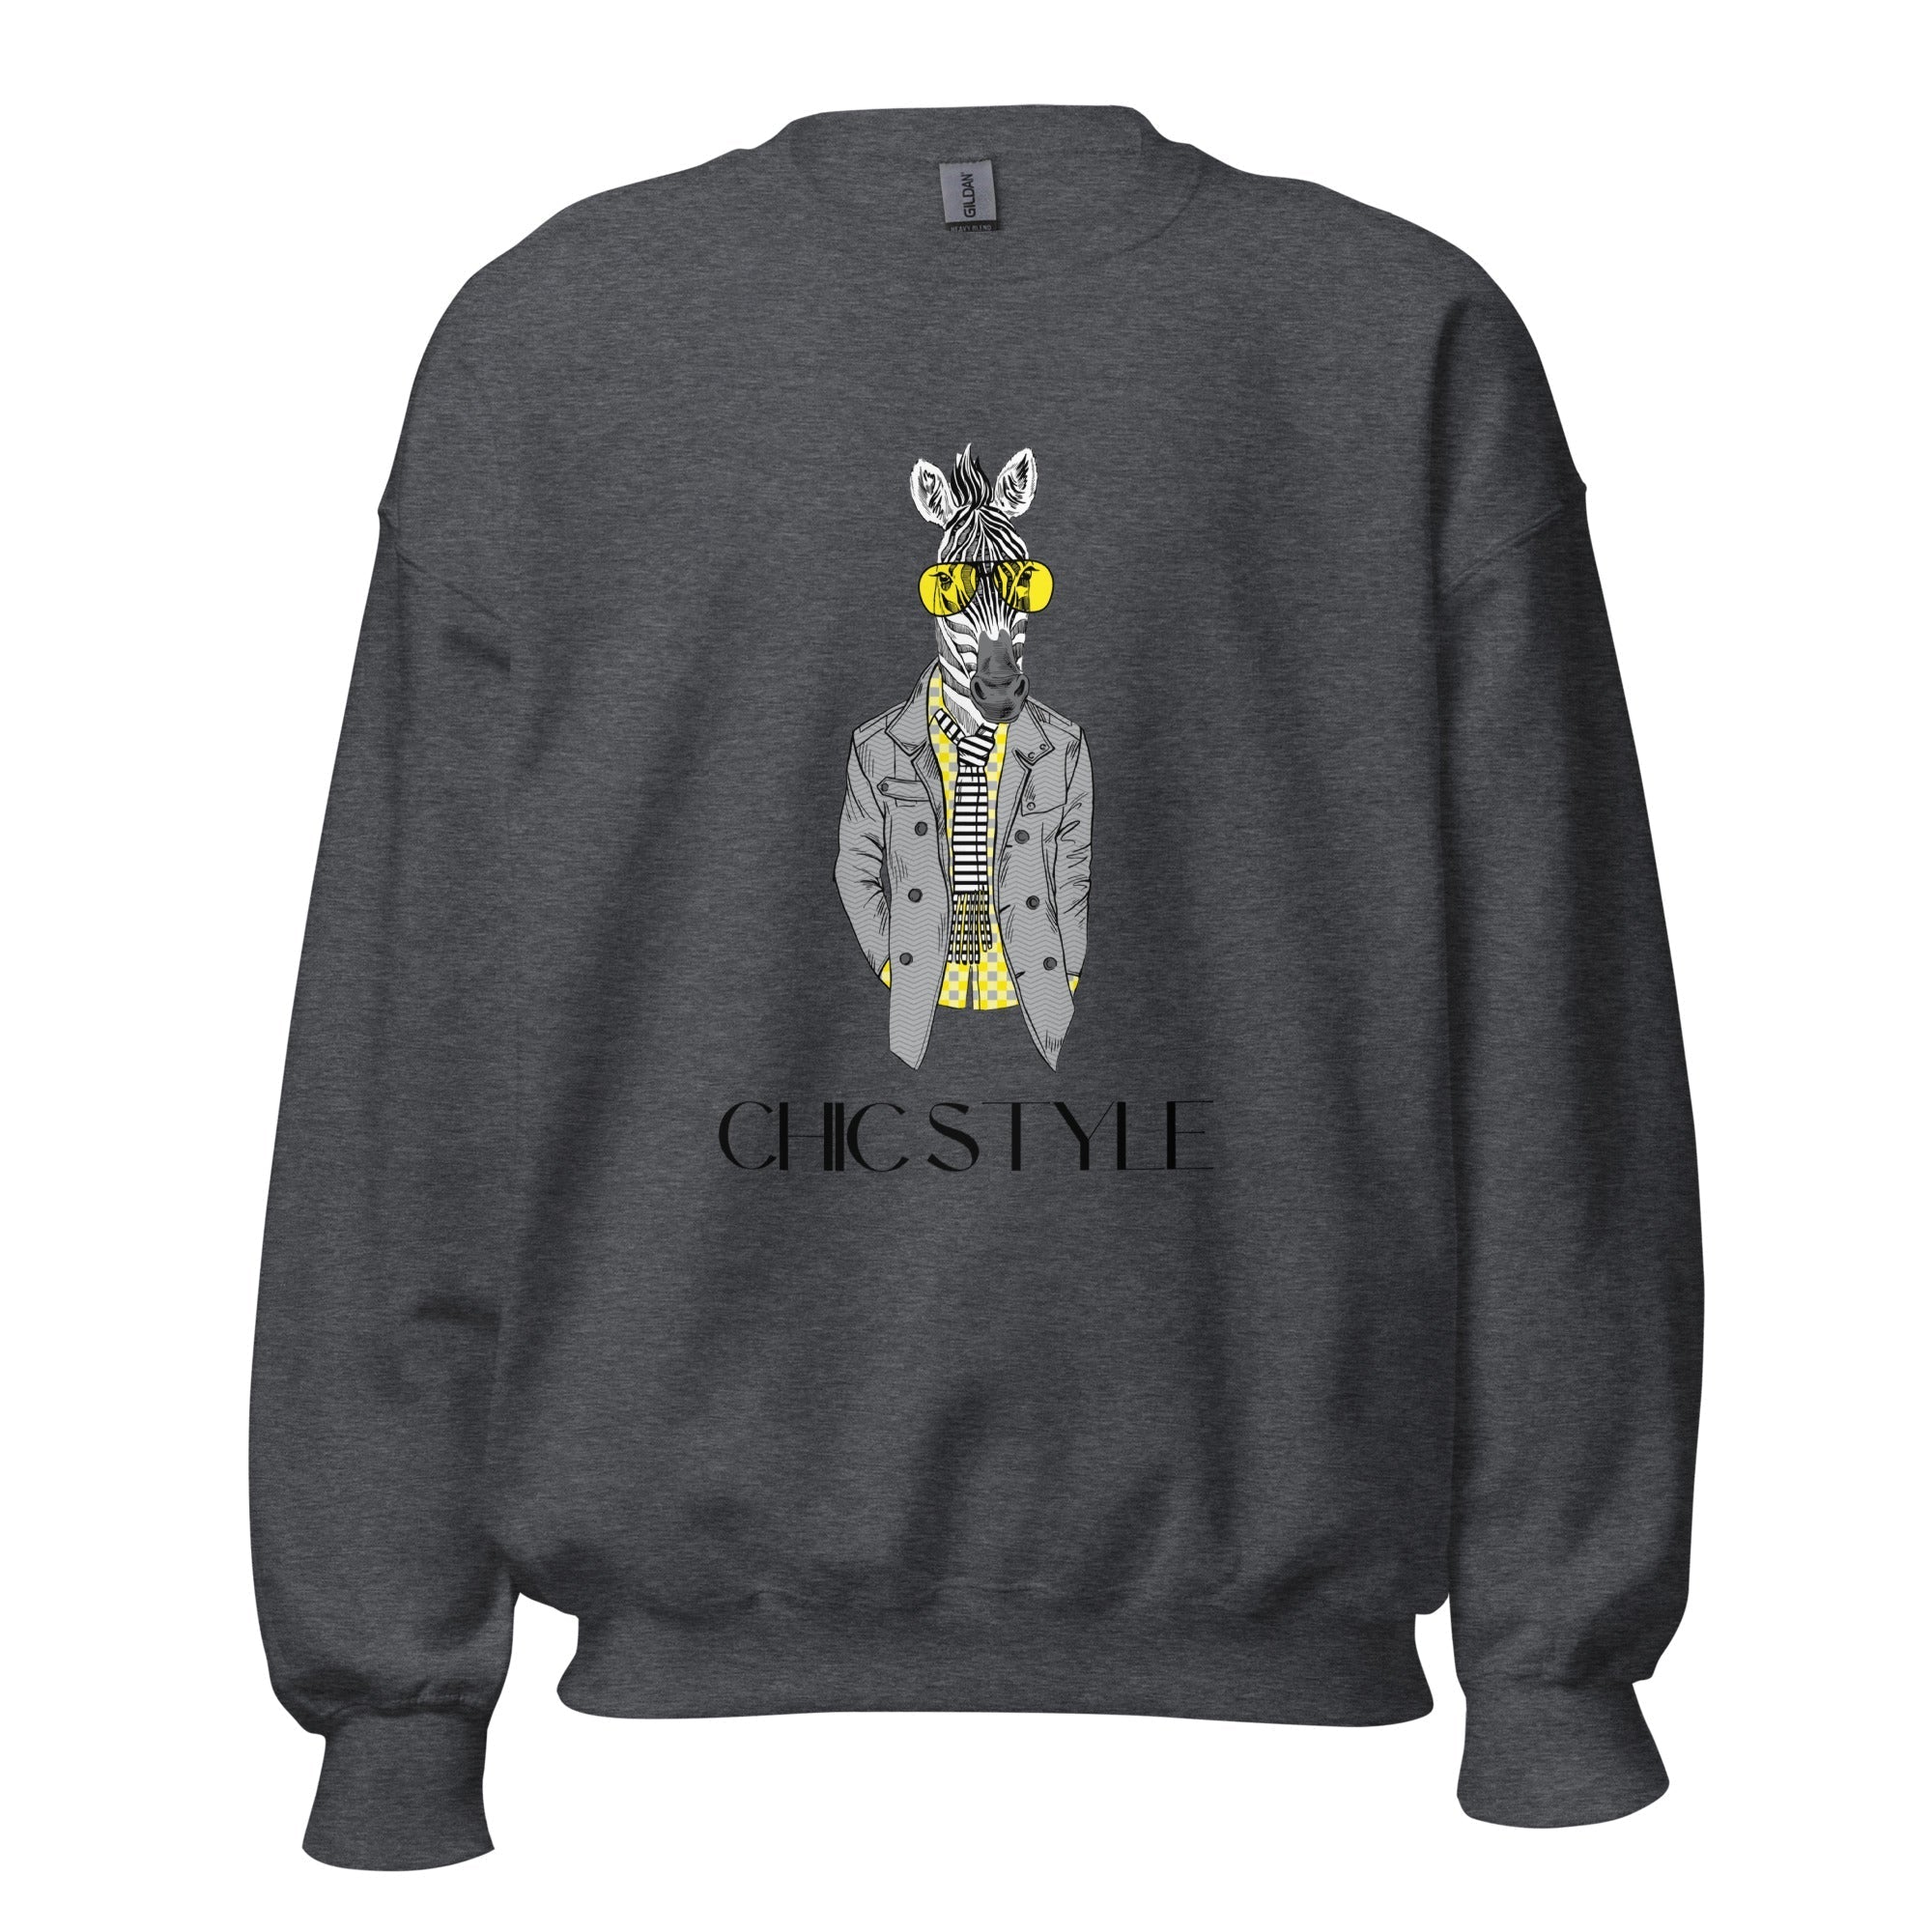 Unisex Crew Neck Sweatshirt - Chic Style - GRAPHIC T-SHIRTS